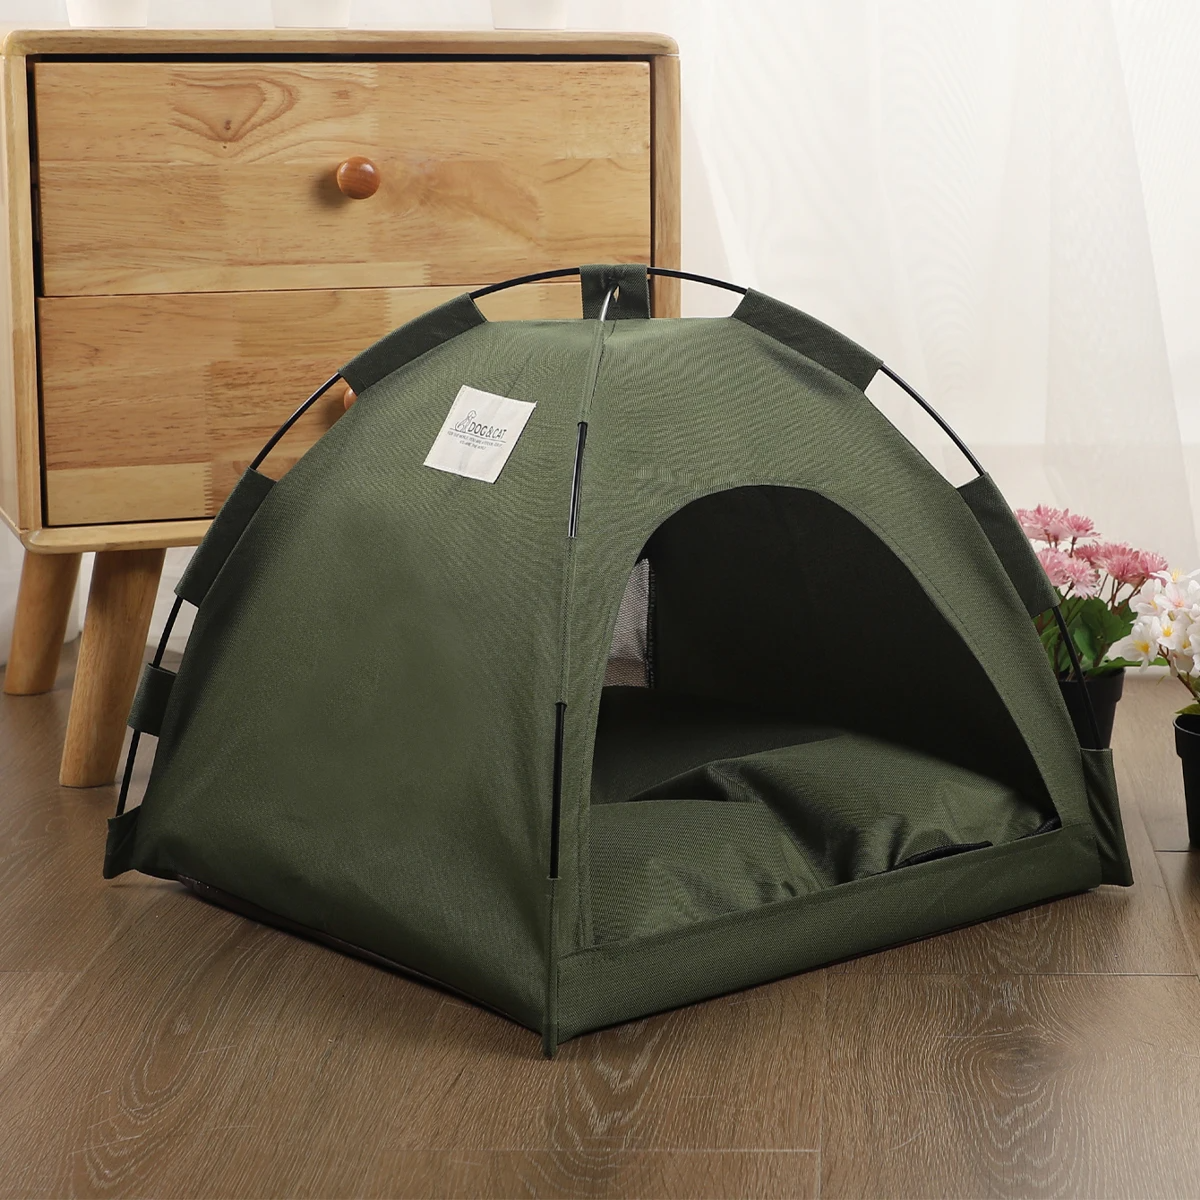 Pet Tent Bed - Winter Cat House